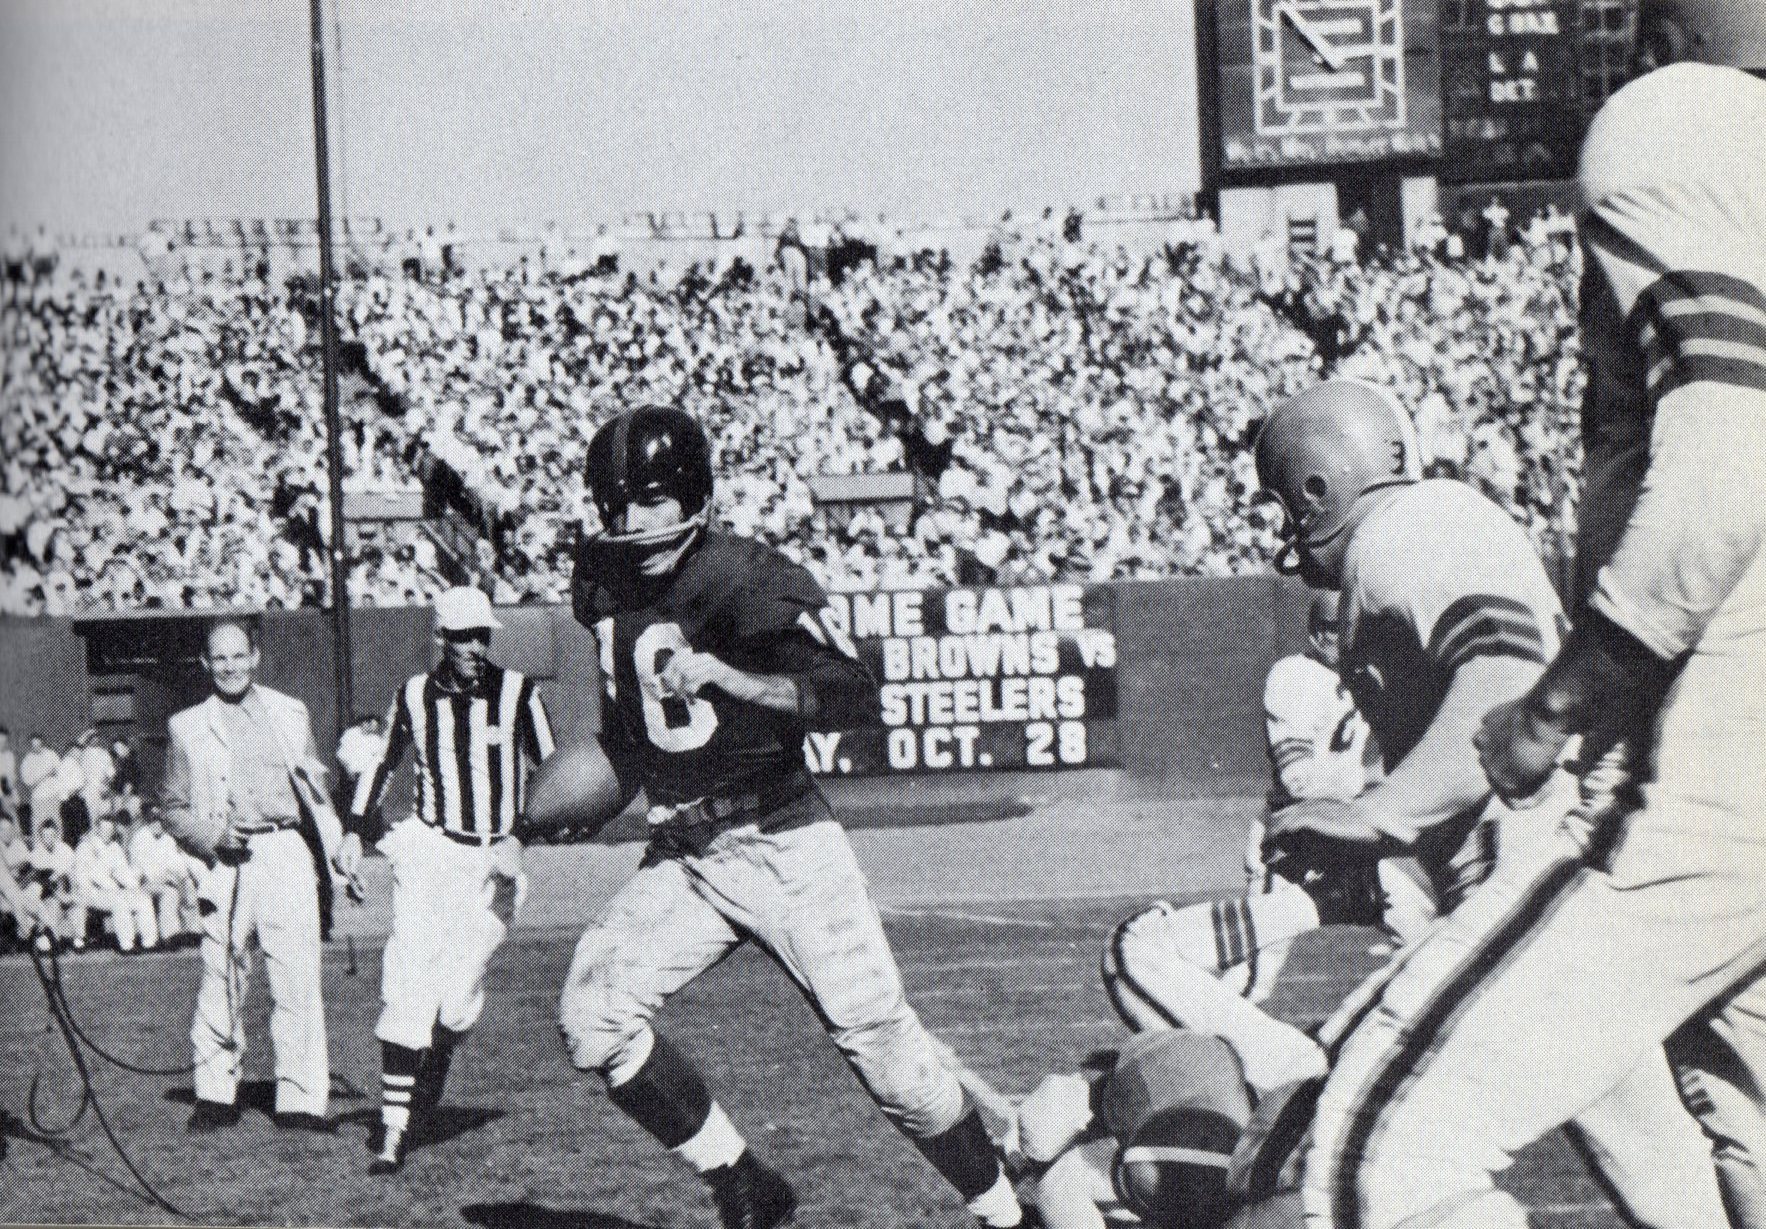 The 1956 New York Giants